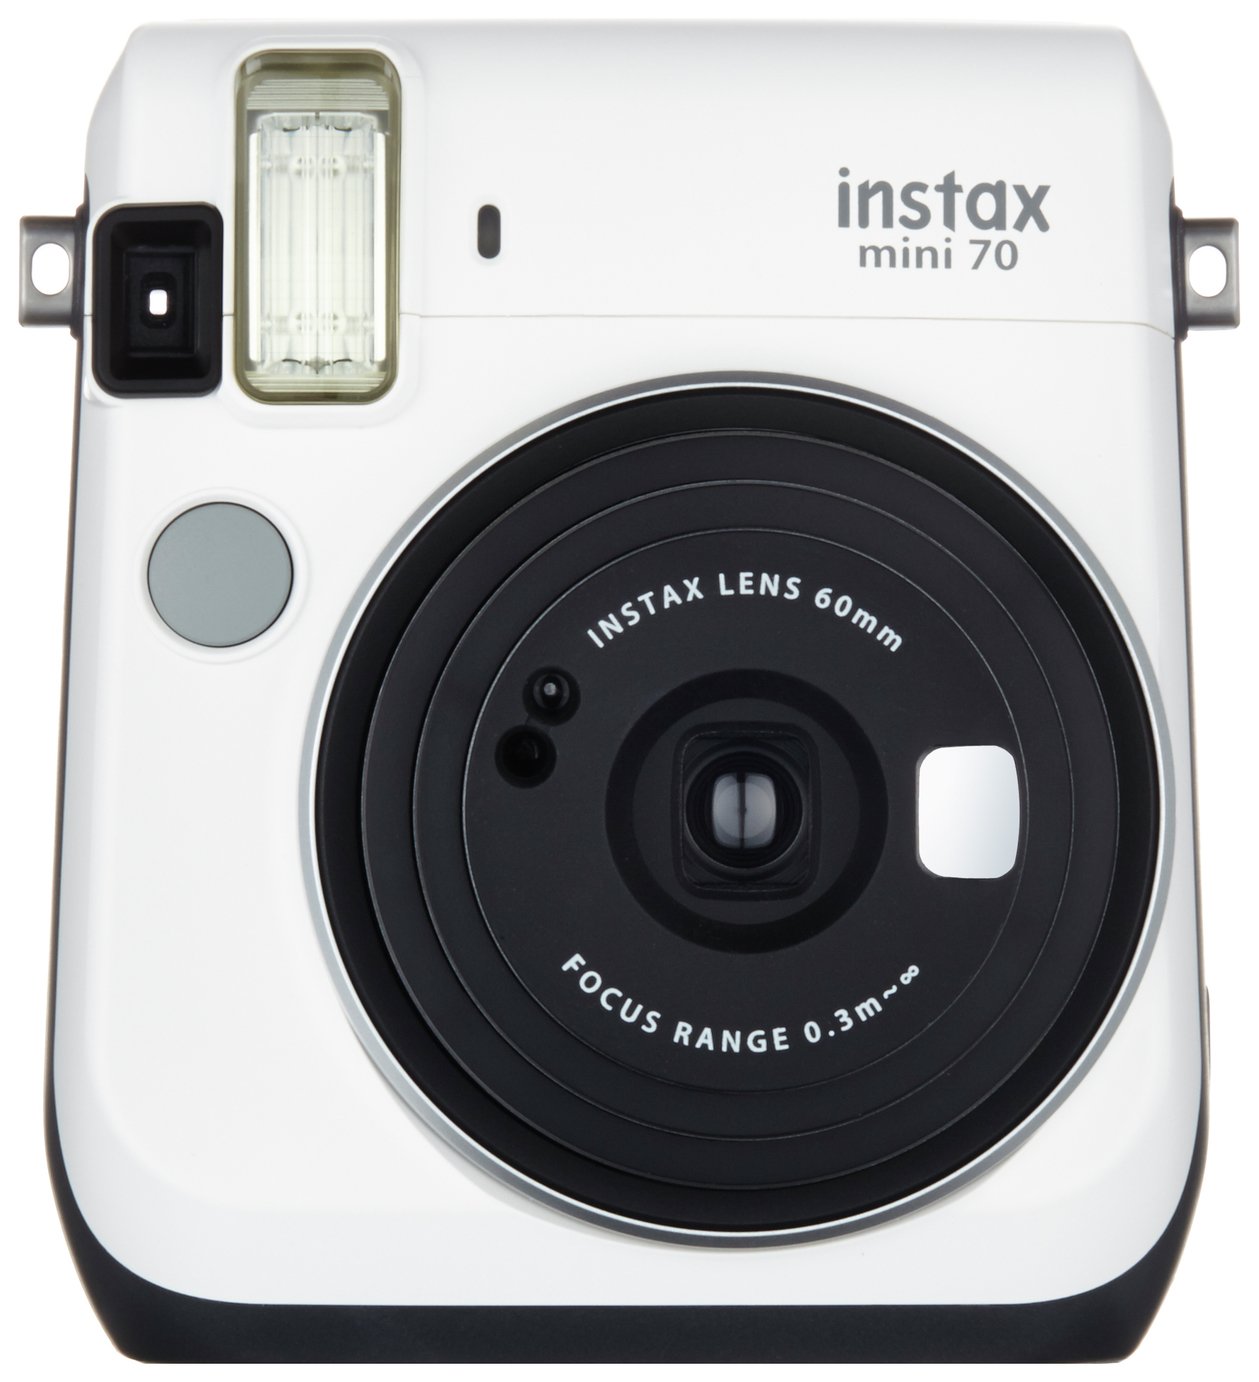 instax Mini 70 camera with 10 shots - White